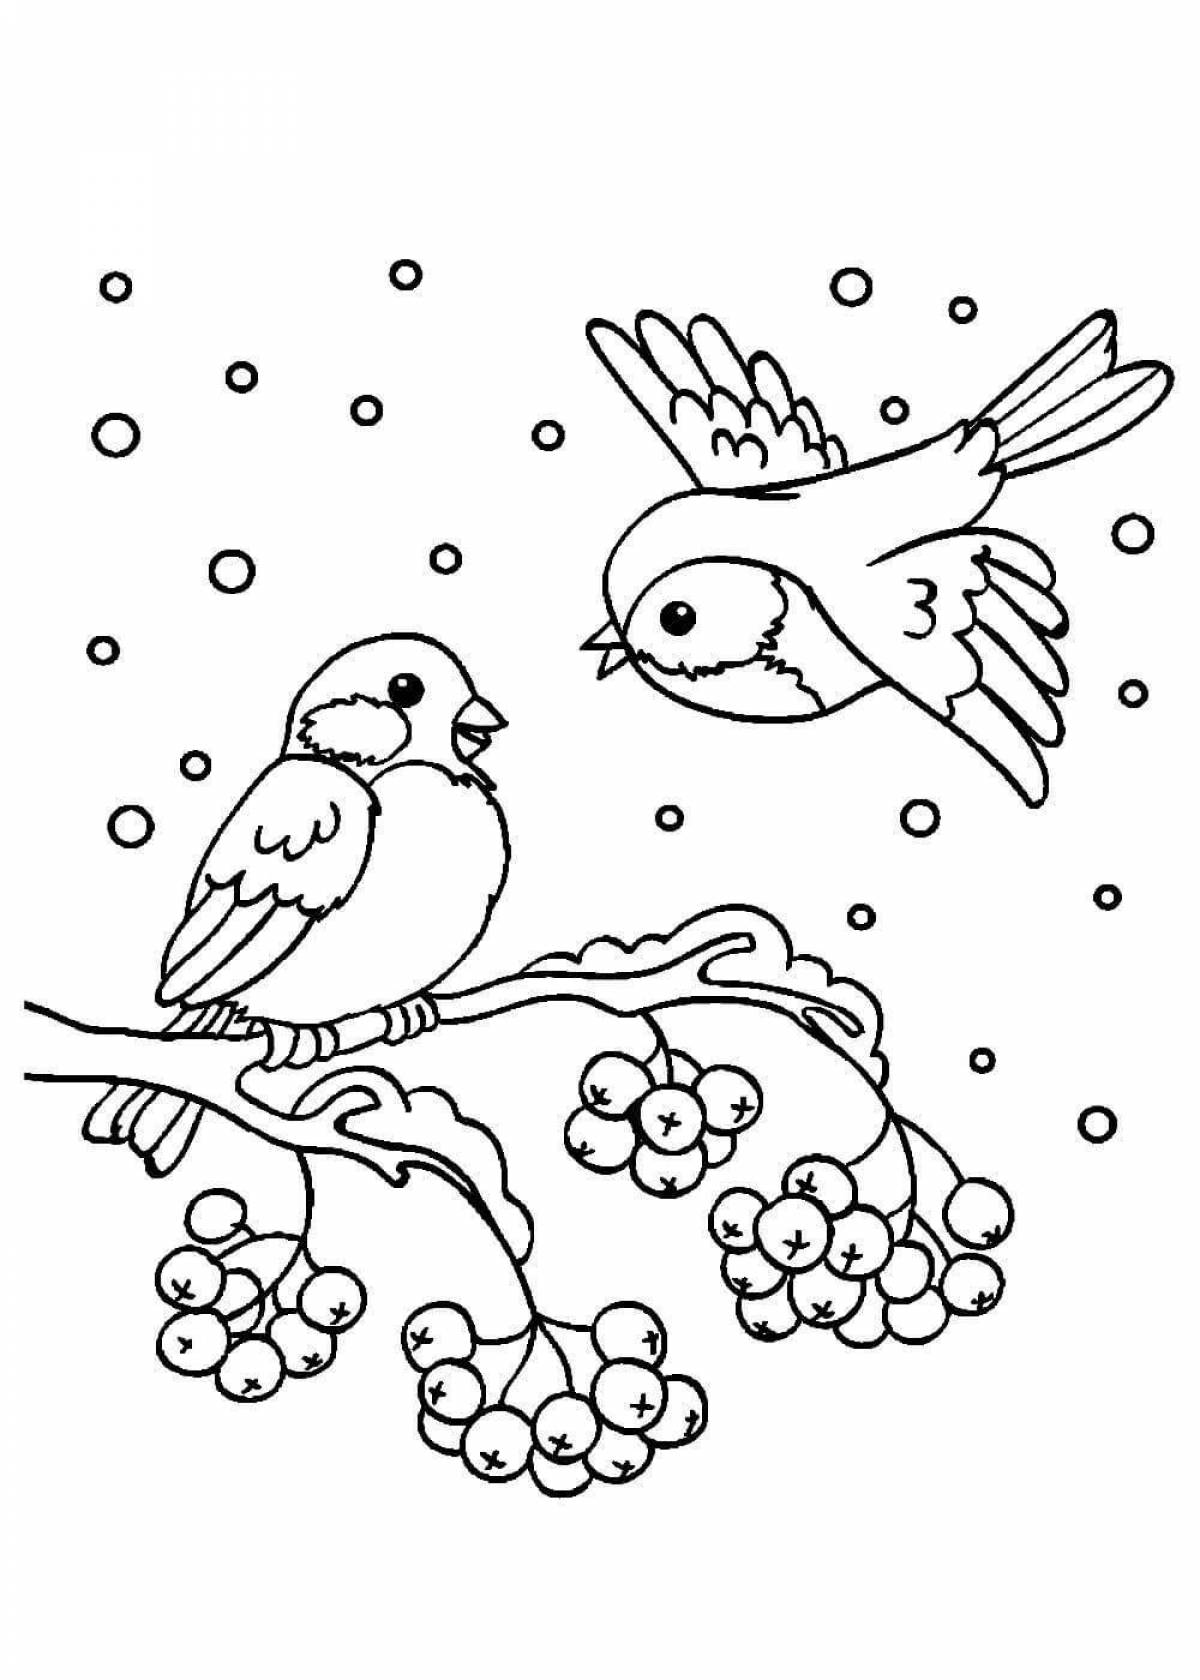 Coloring page joyful winter birds